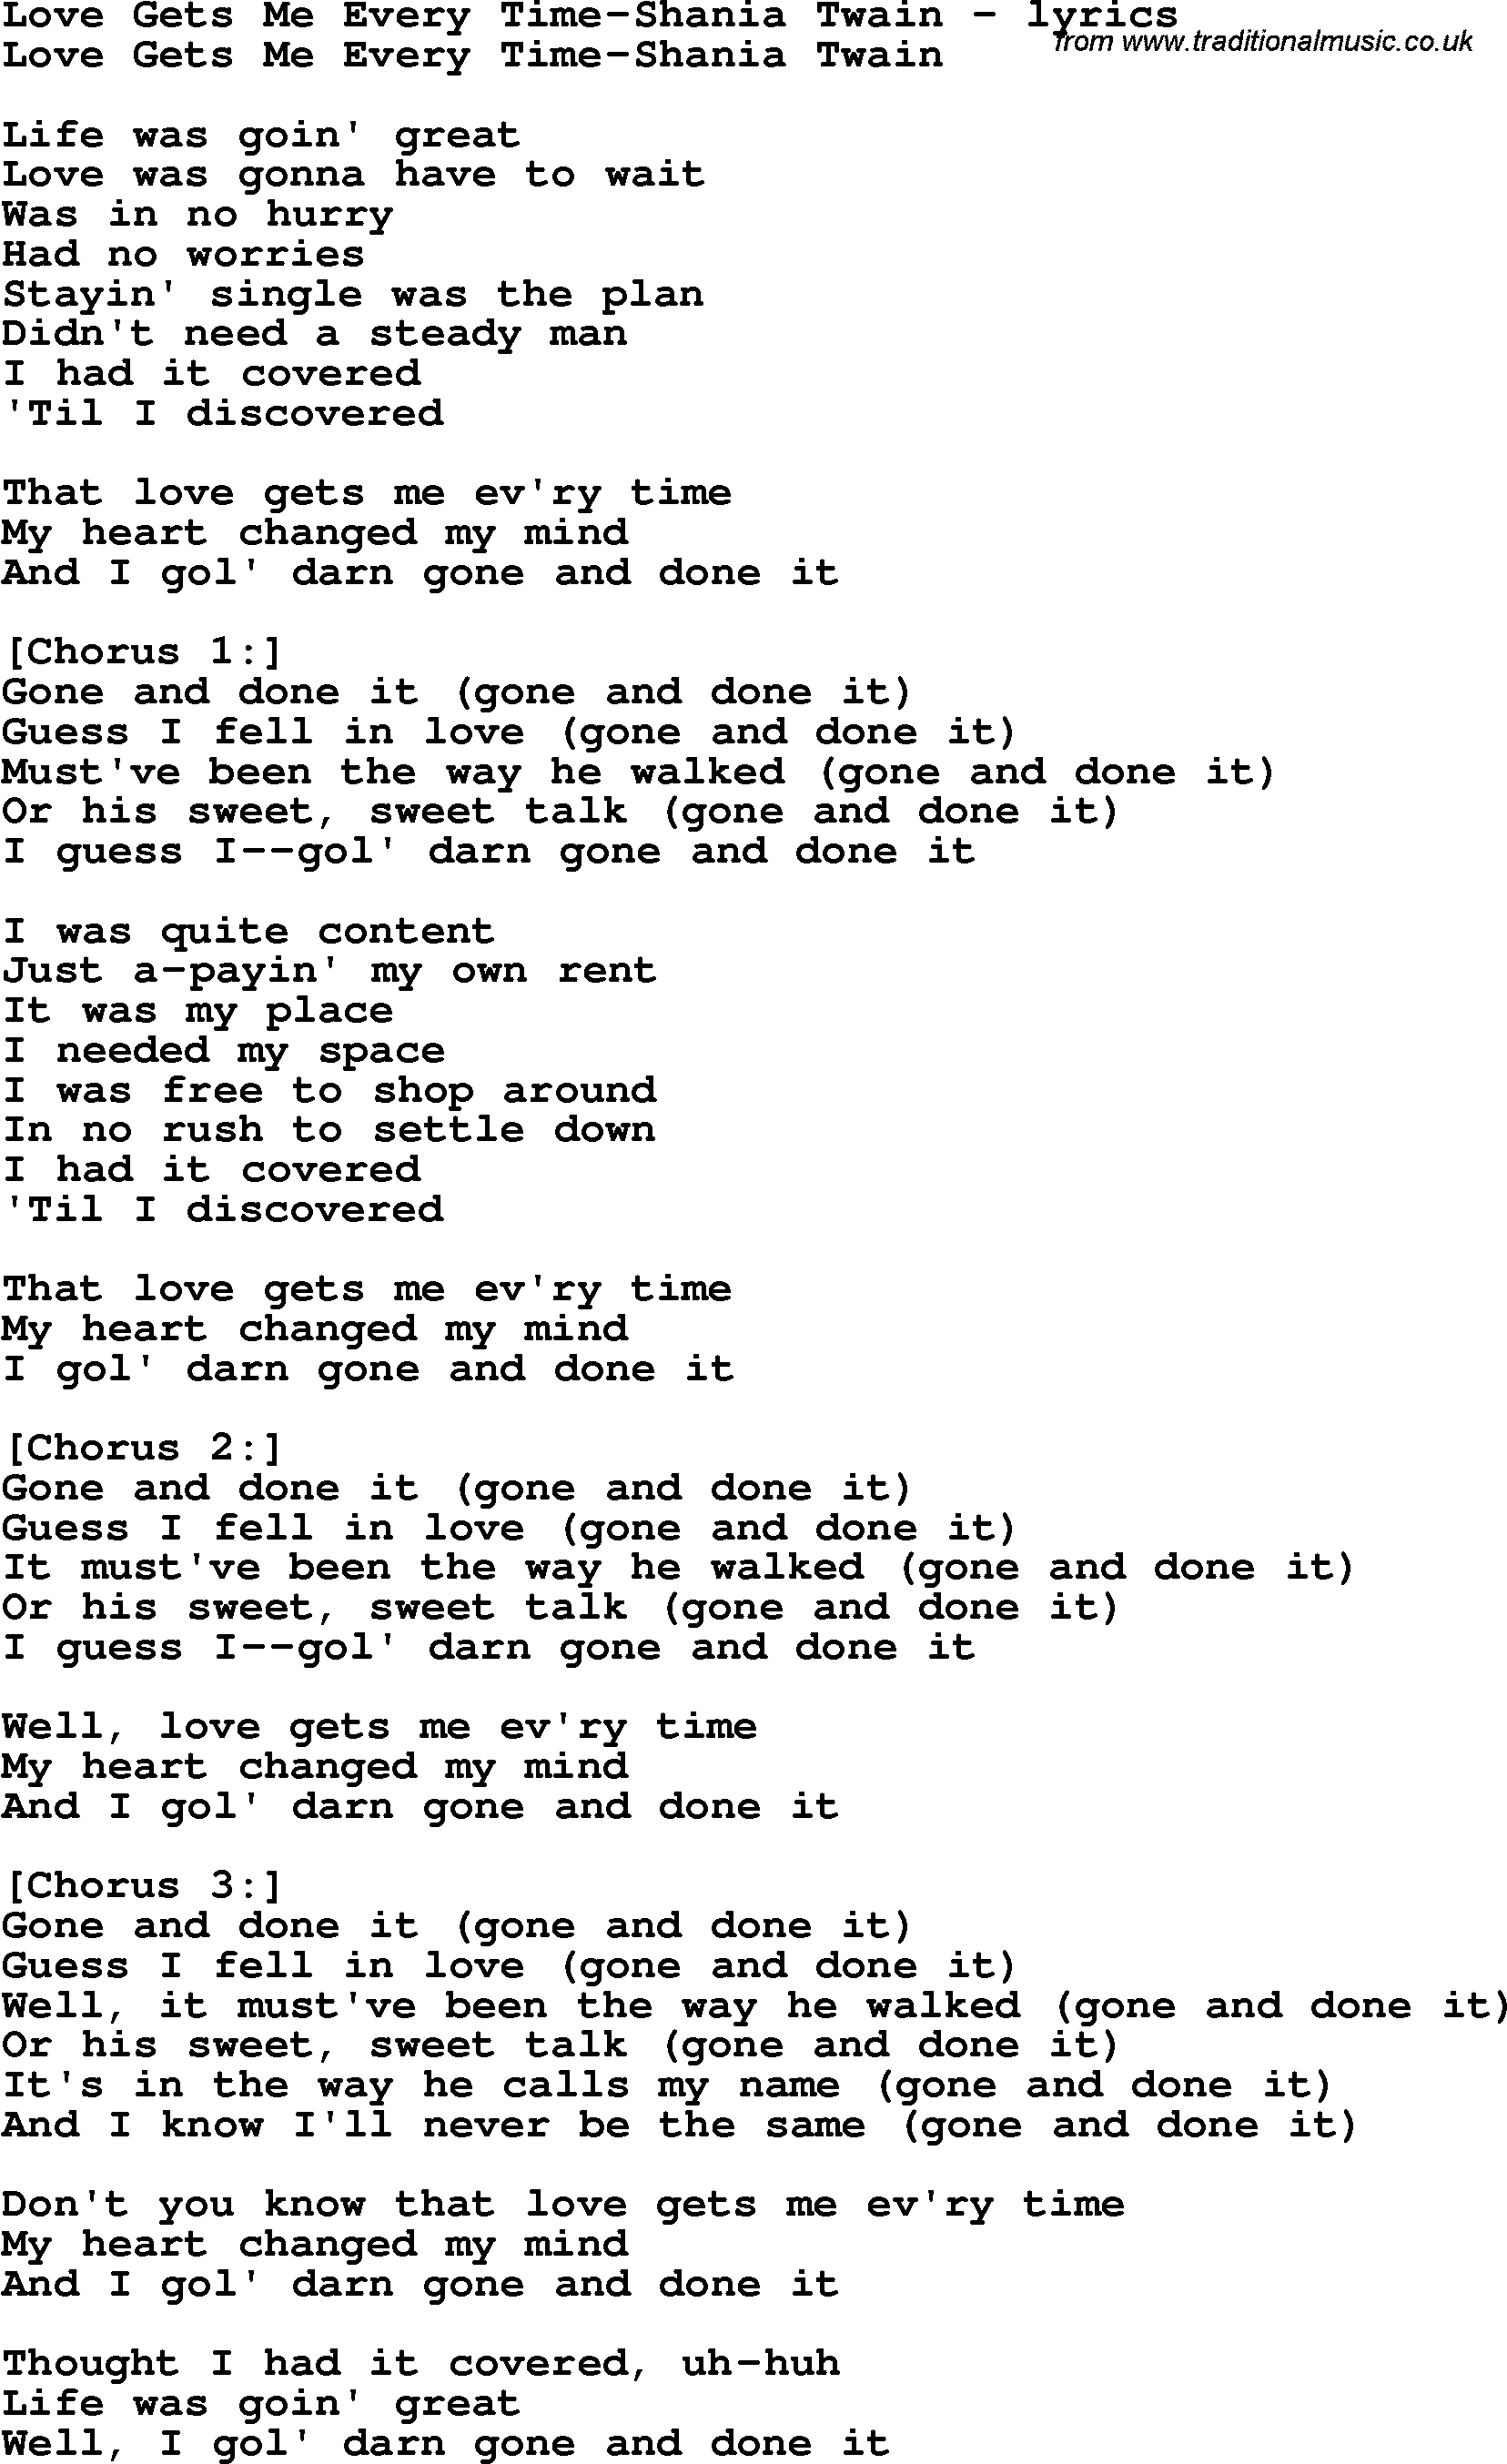 Love Song Lyrics for: Love Gets Me Every Time-Shania Twain